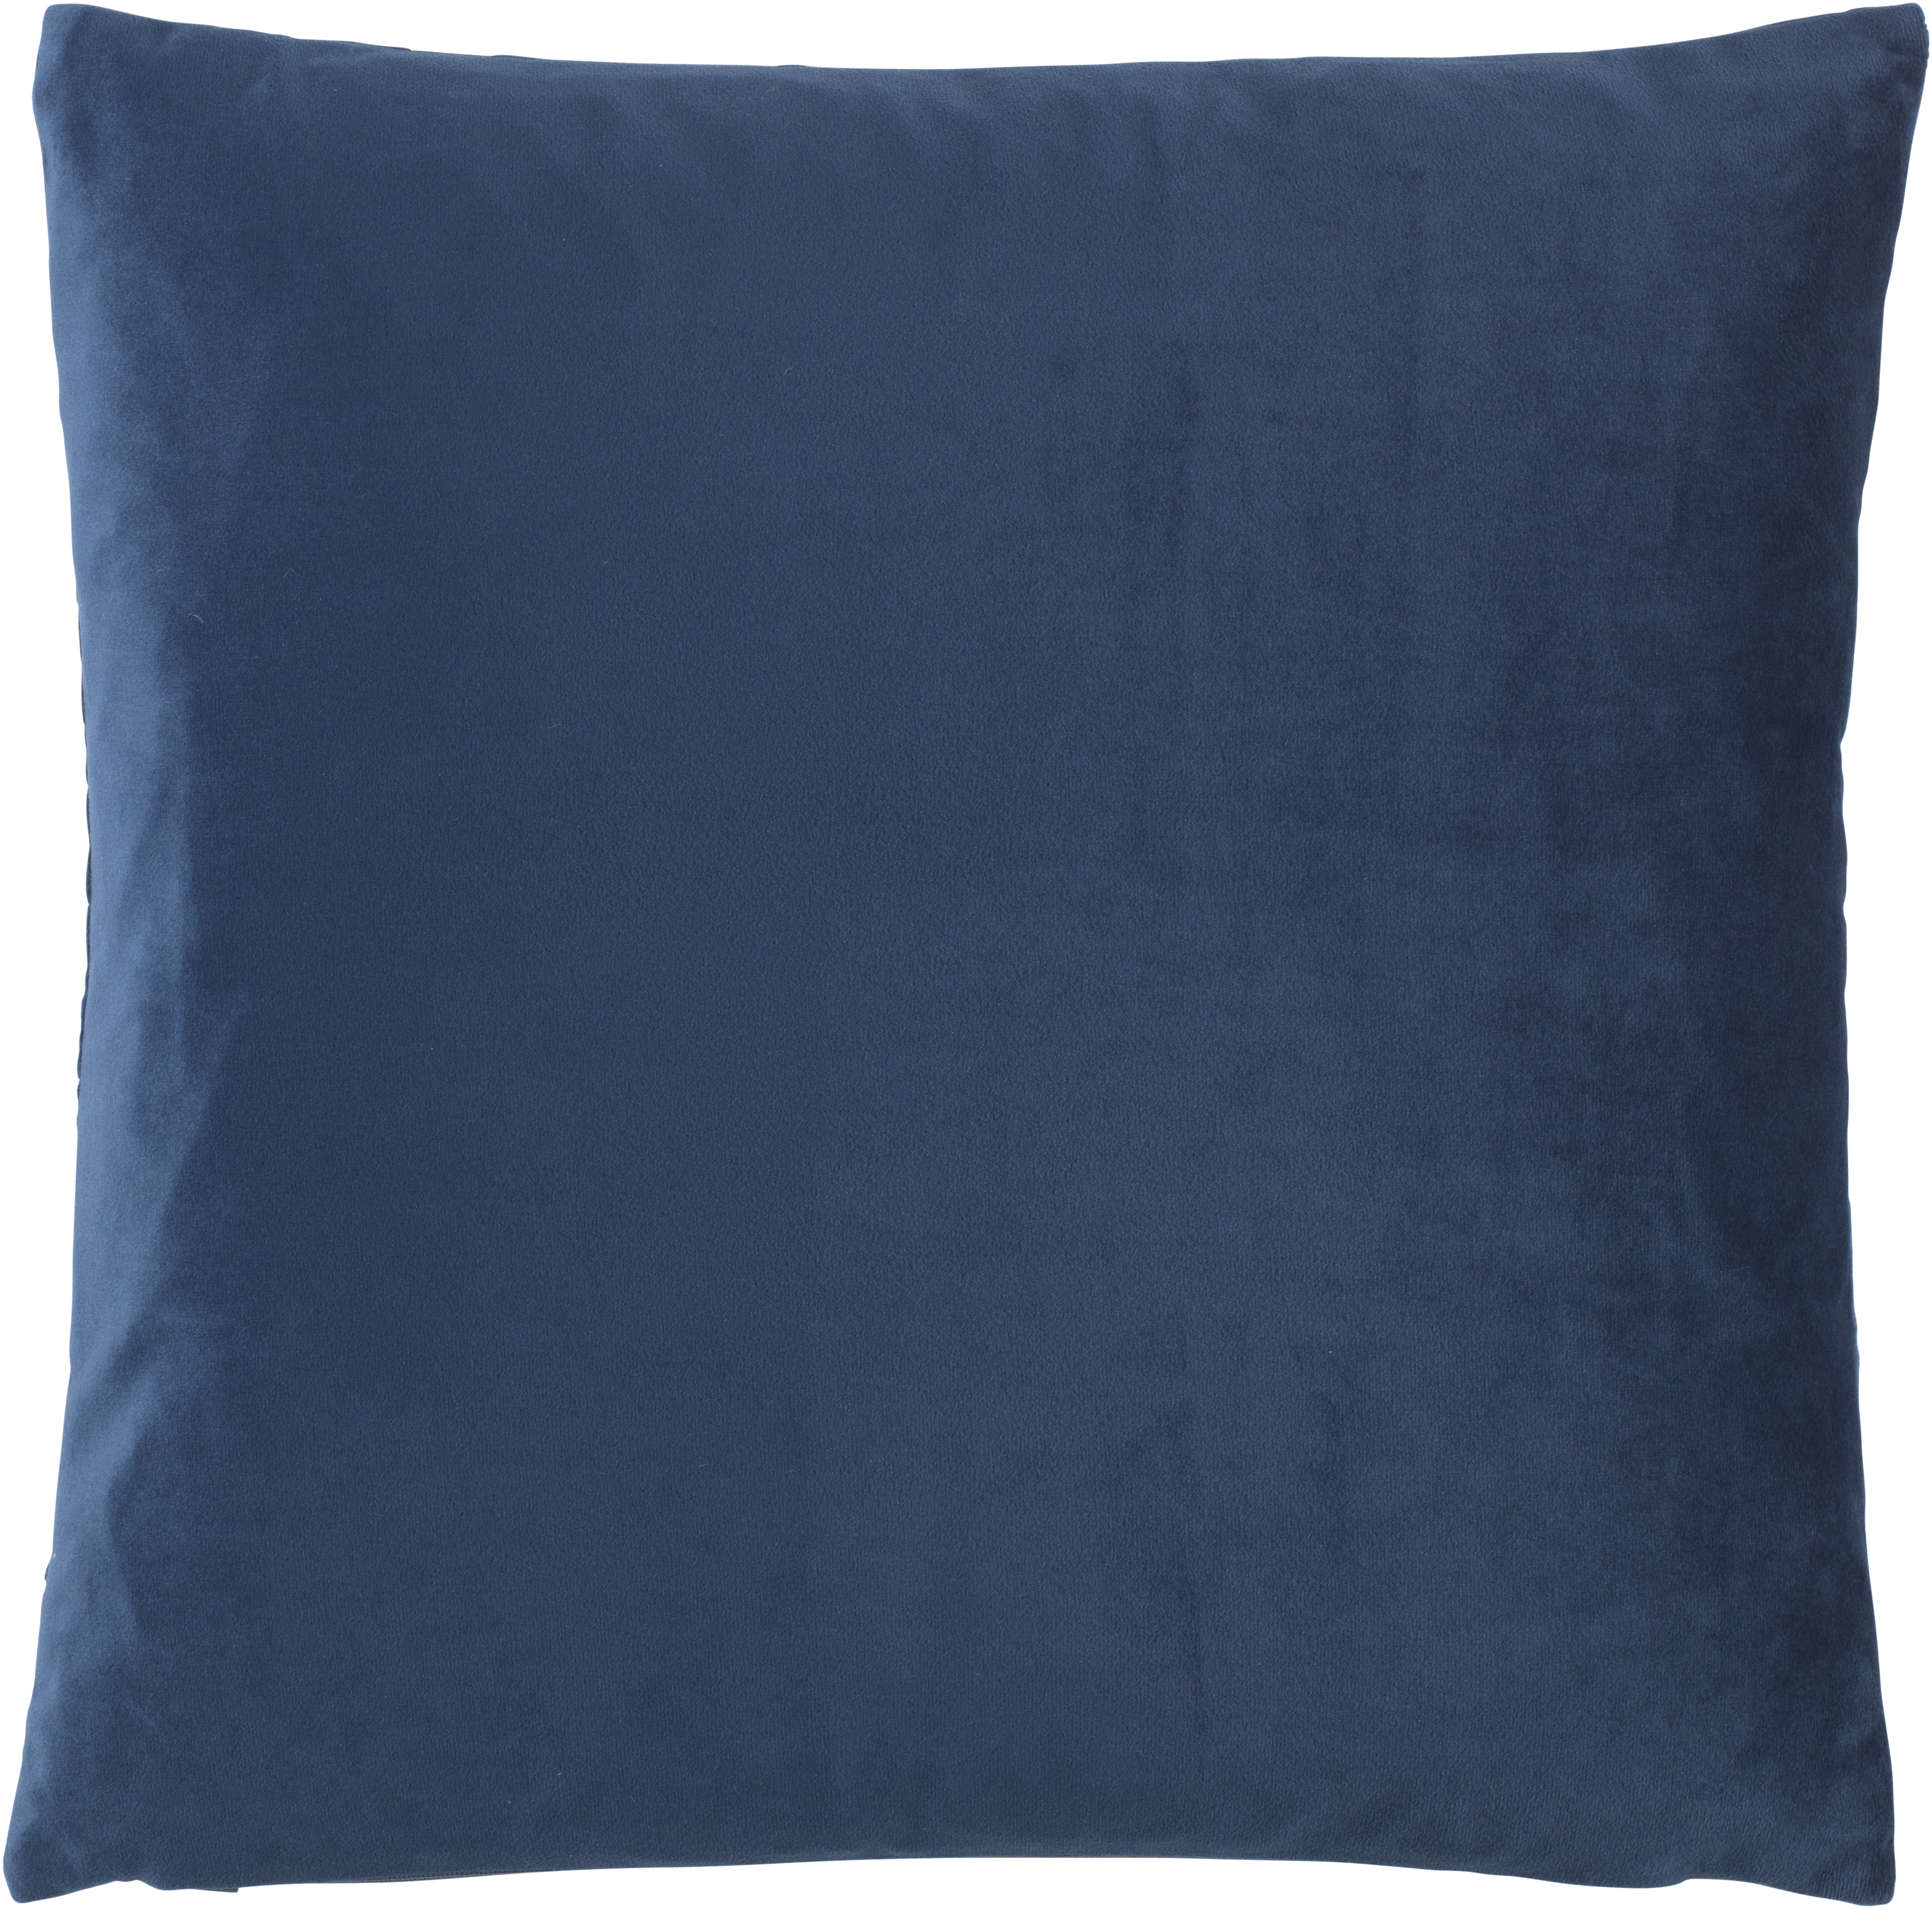 JOAN - Kussenhoes blauw 45x45 cm